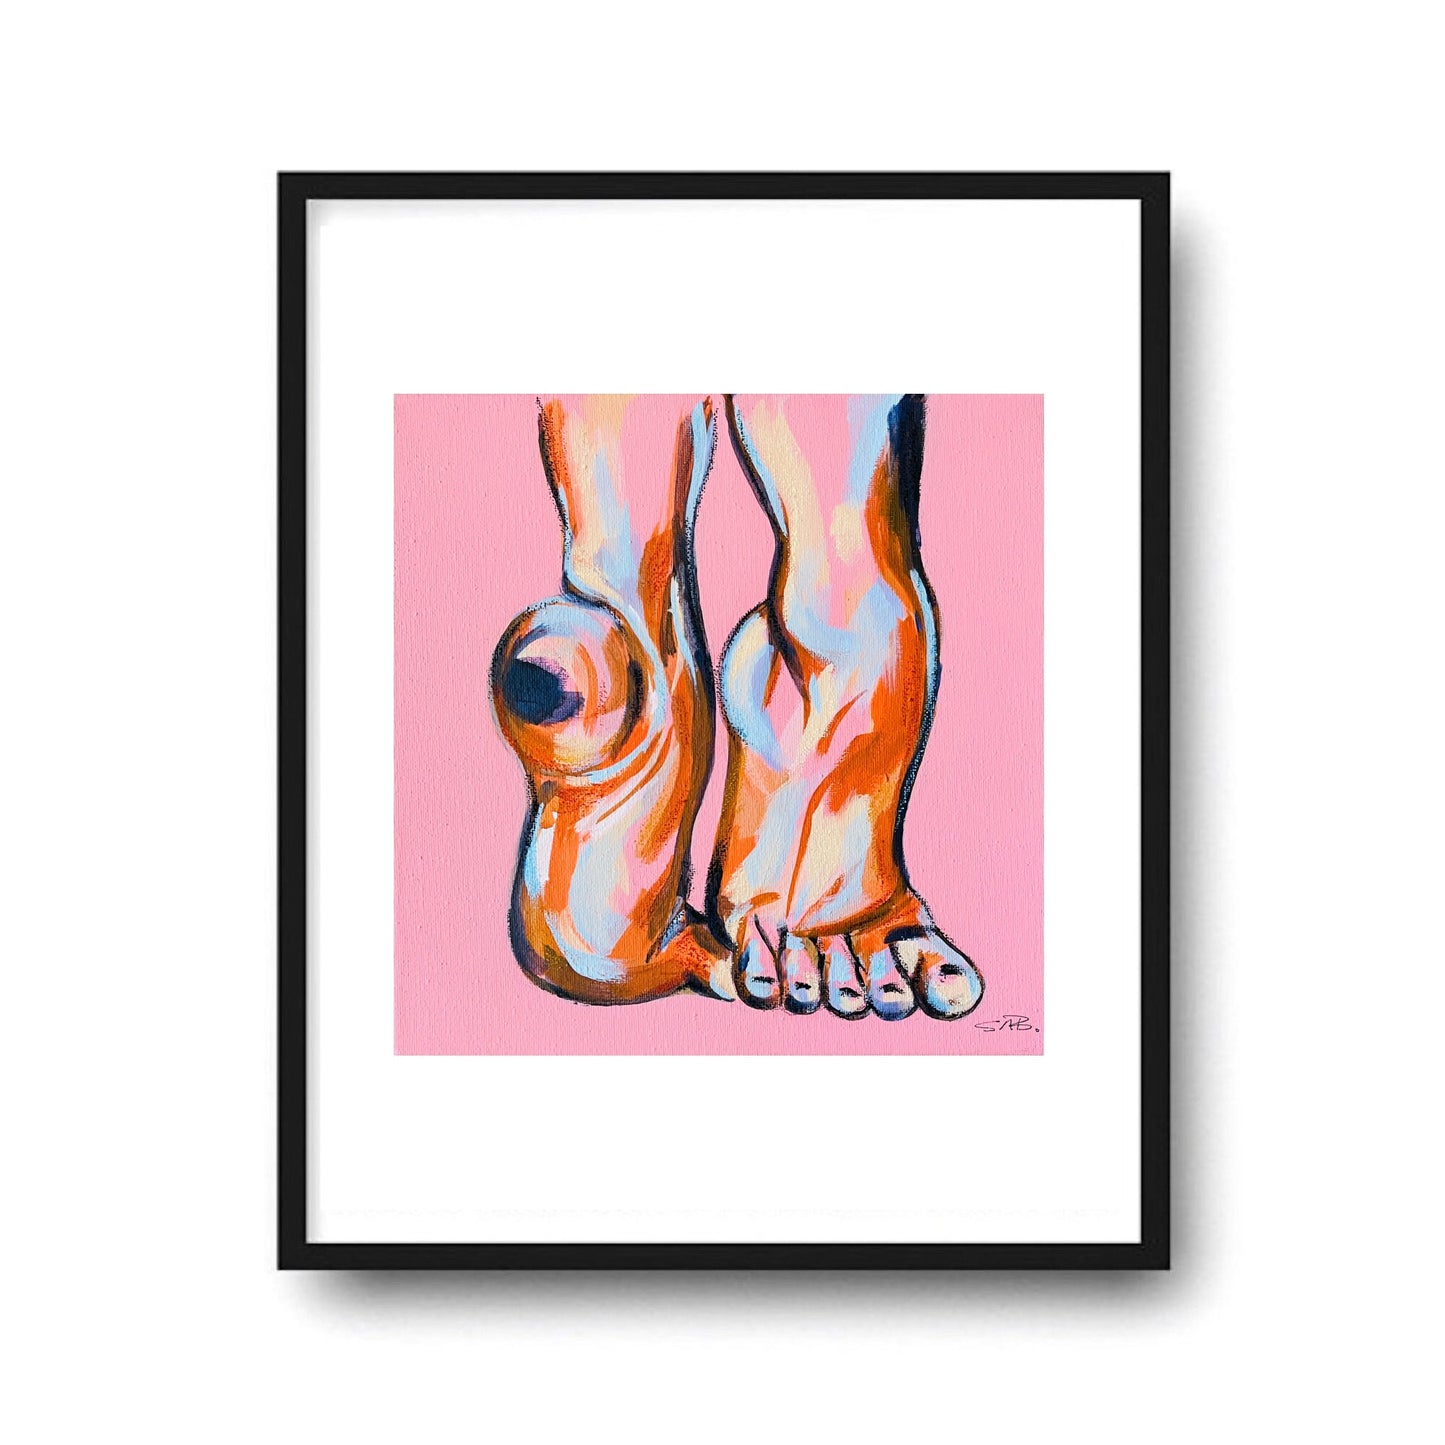 Acrylic mini painting stretched canvas 8x10 Modern Art print figurative art female nude decor lgbtq fine art feet